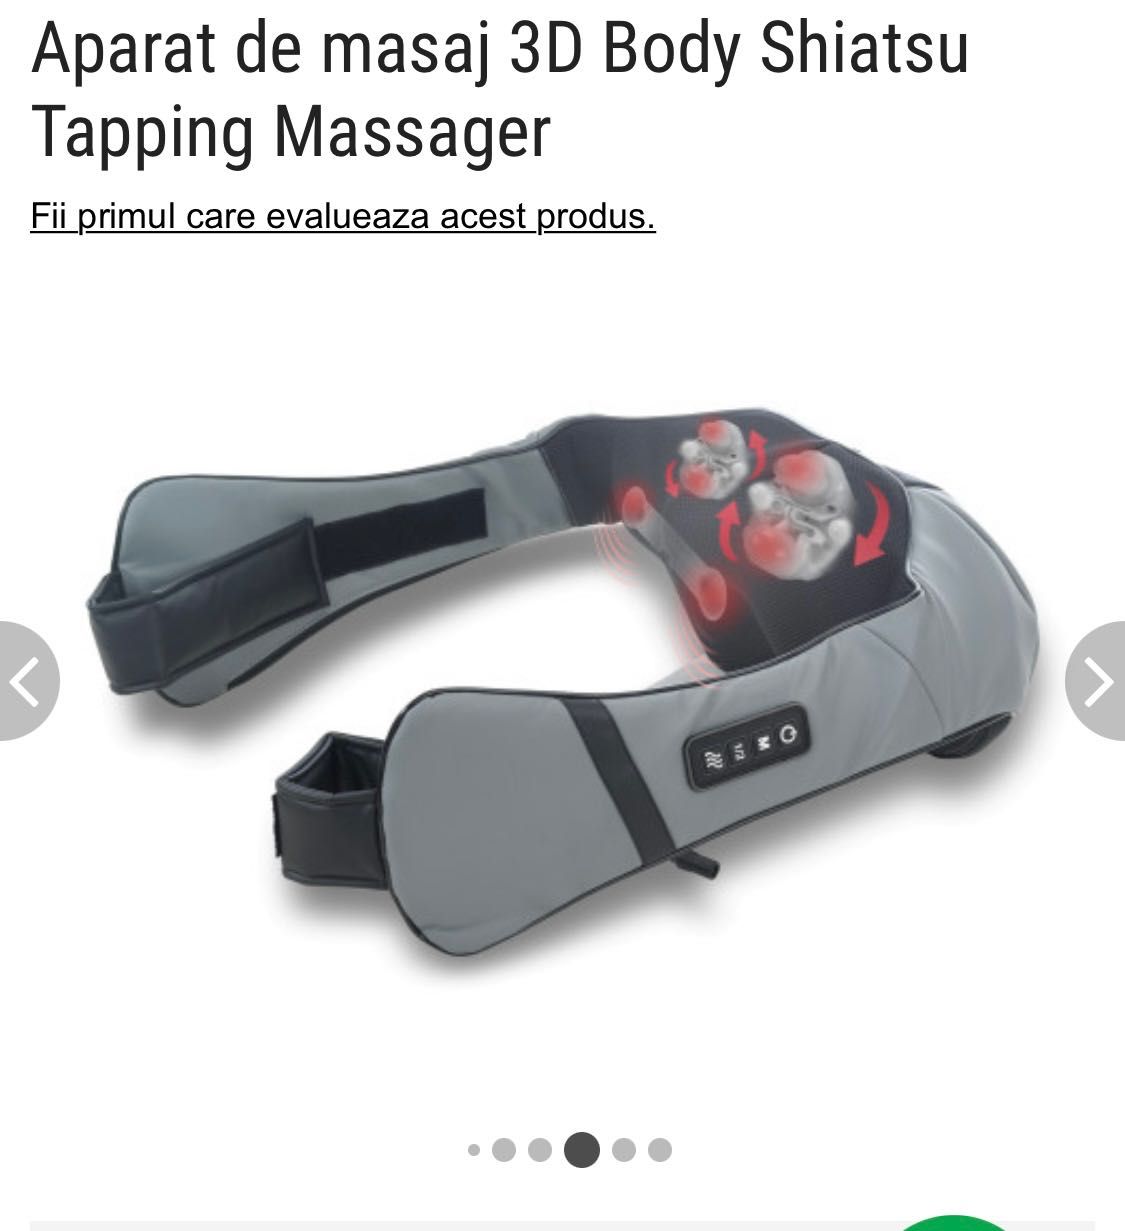 Aparat masaj Wellneo-3D Body Shiatsu Tapping Massager